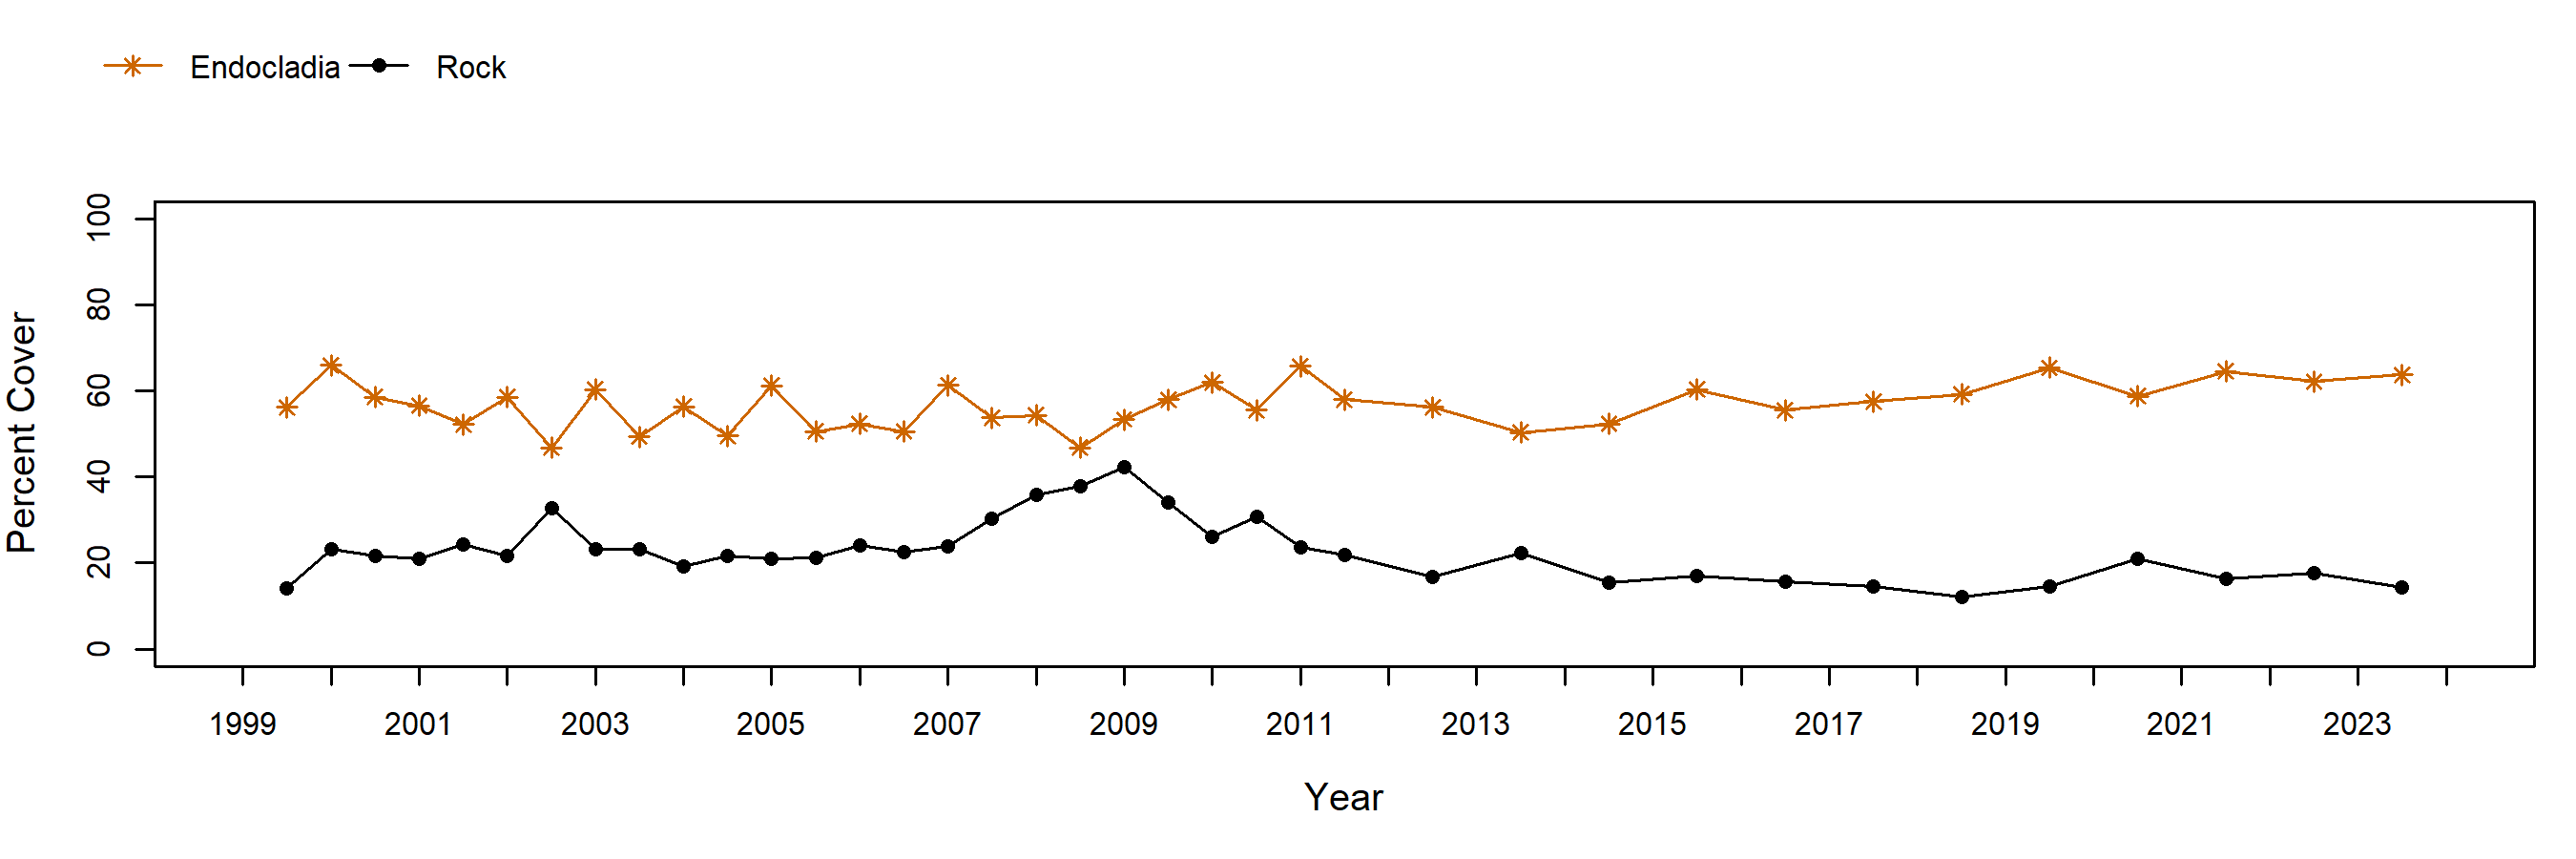 Andrew Molera Endocladia trend plot